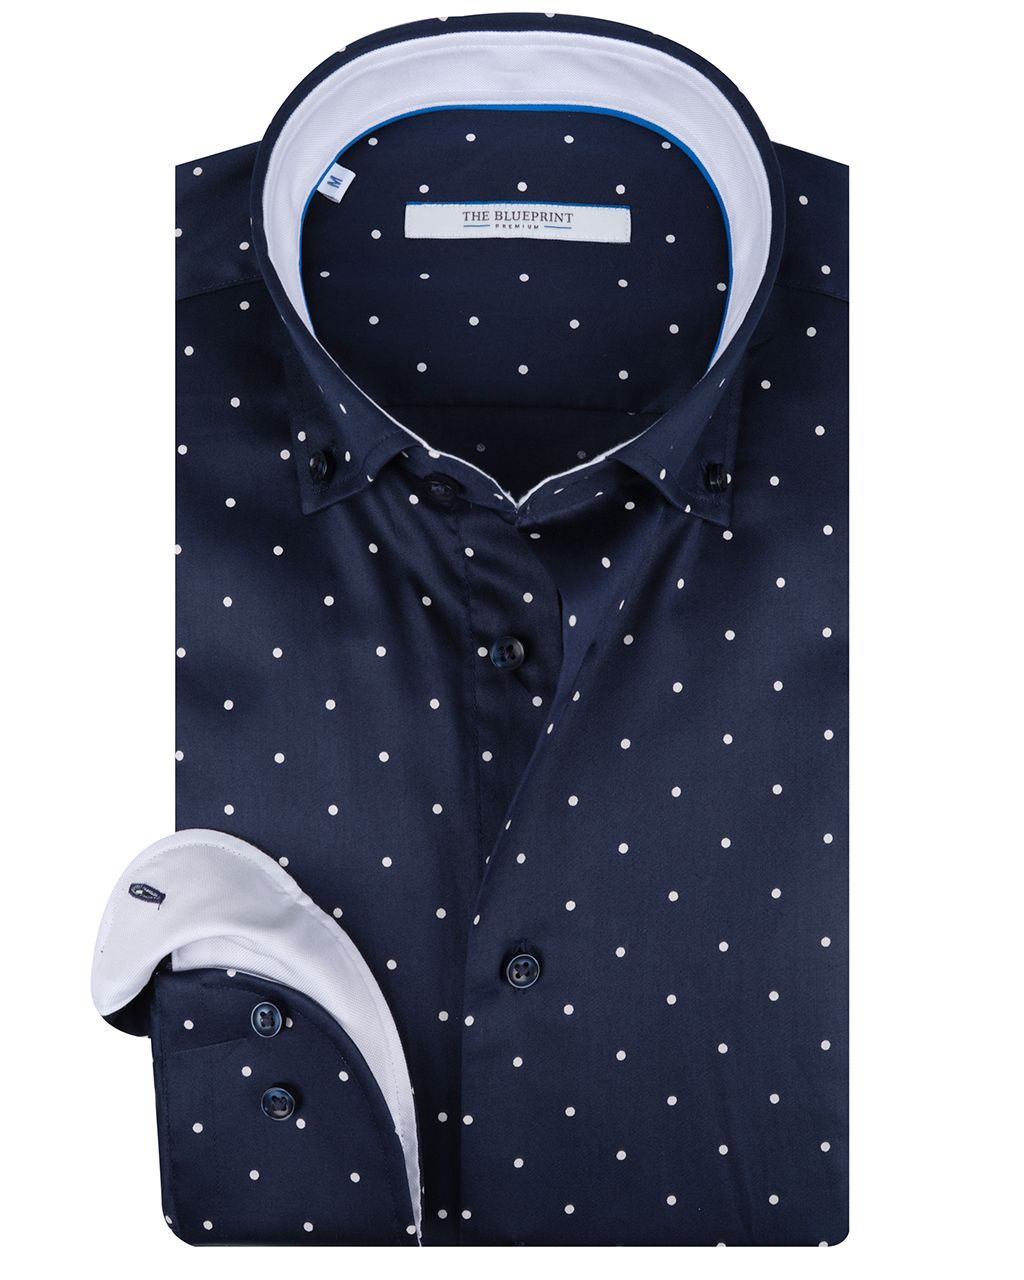 The BLUEPRINT Premium Trendy Overhemd LM Donkerblauw stip 078402-001-L